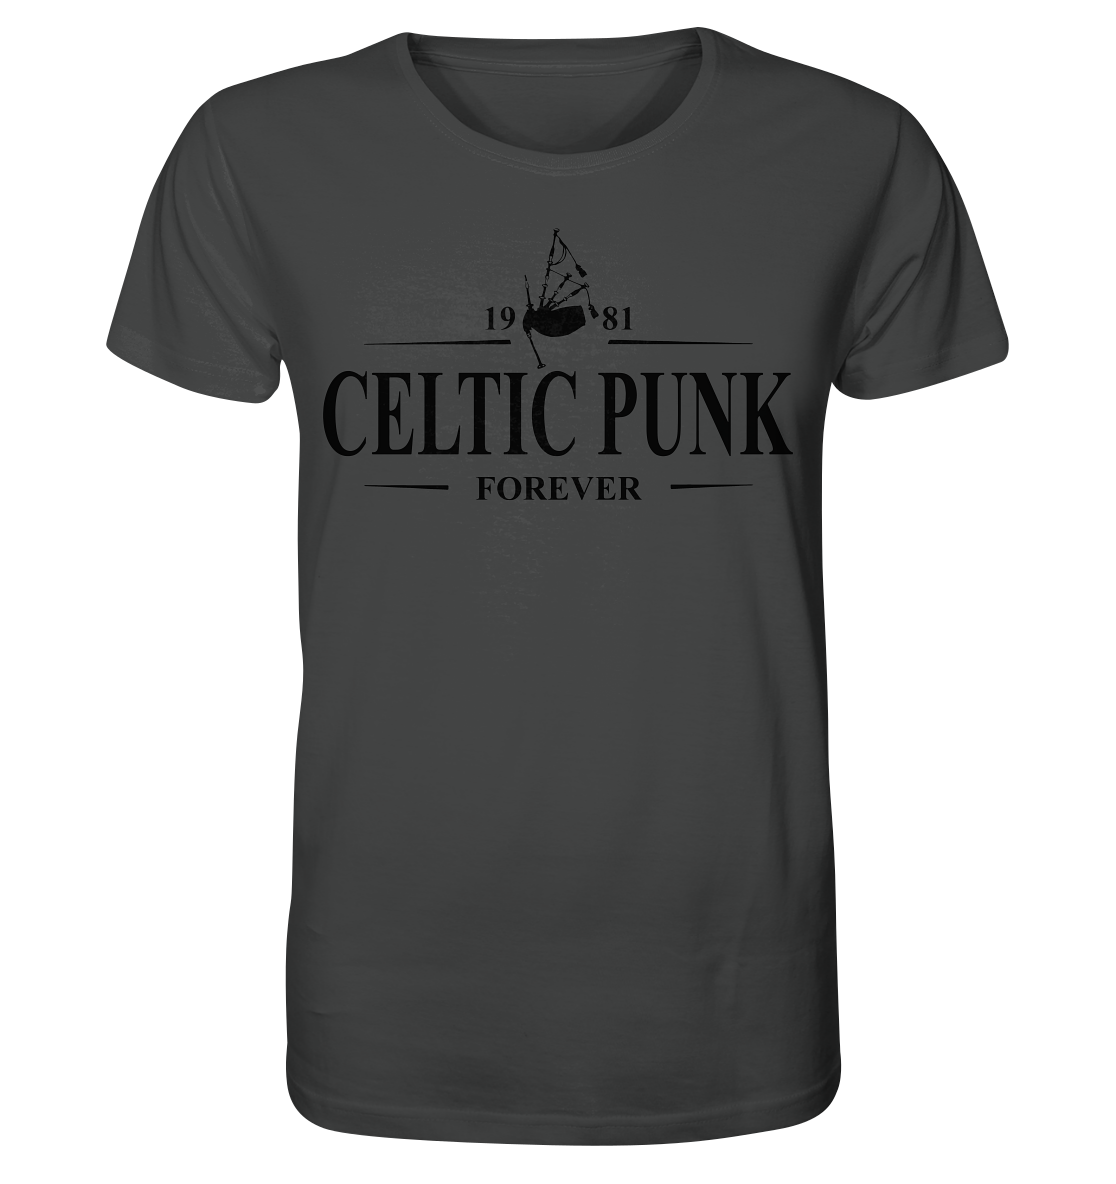 Celtic Punk "Forever" - Organic Shirt